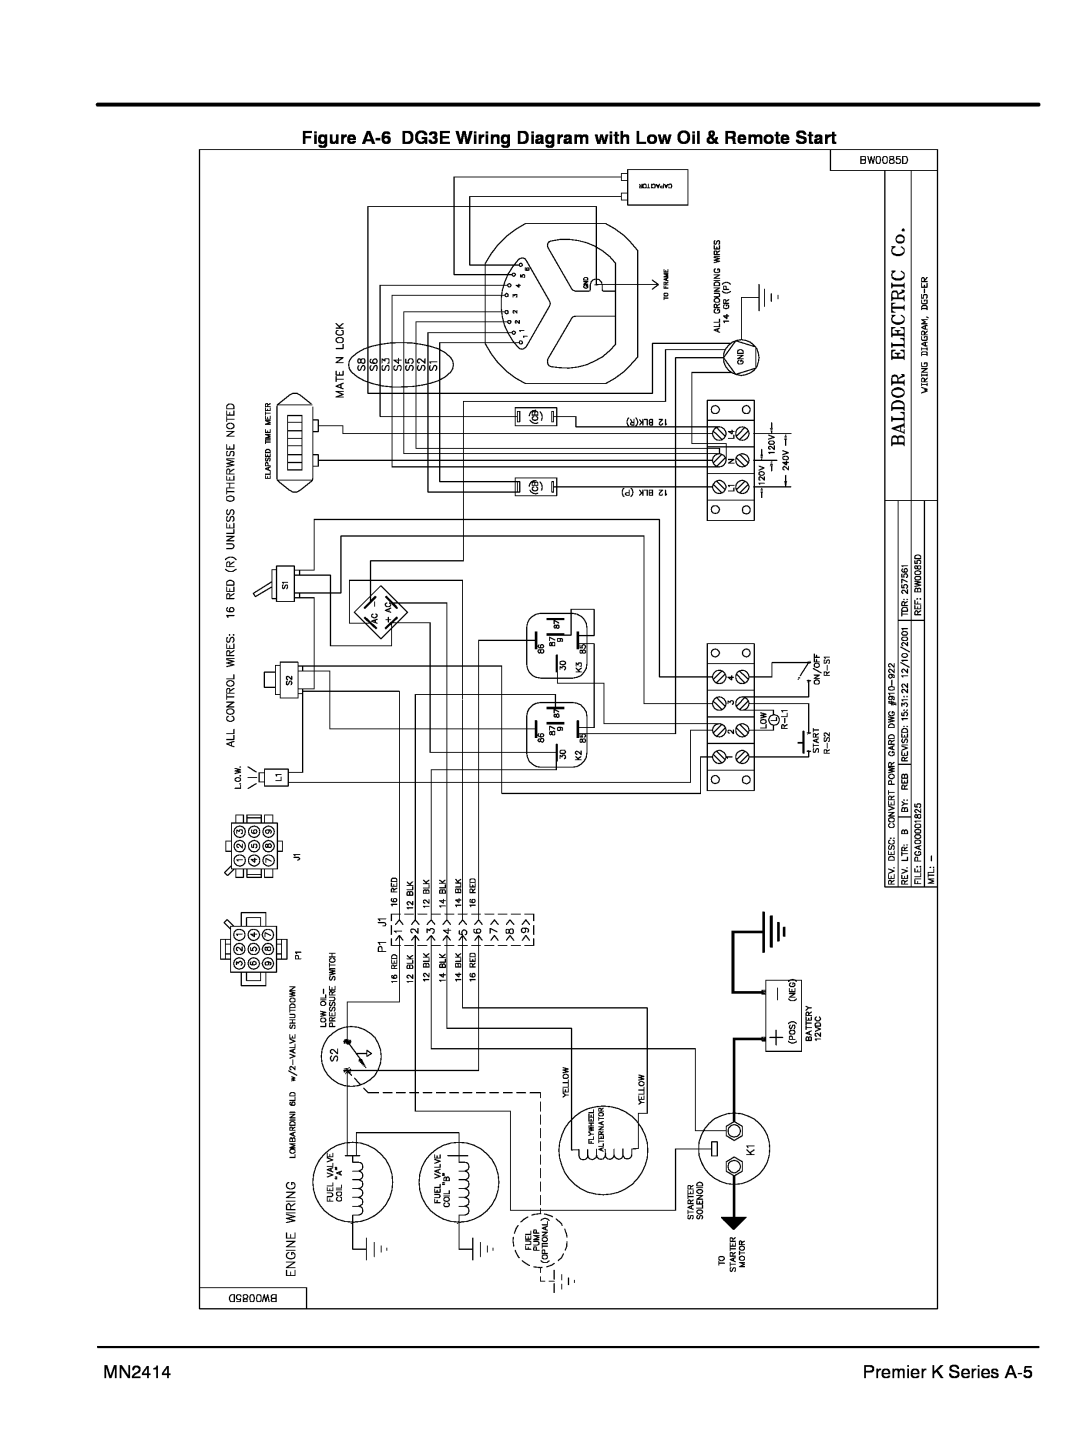 Baldor DG6E manual Figure A-6 DG3E Wiring Diagram with Low Oil & Remote Start, MN2414, Premier K Series A-5 